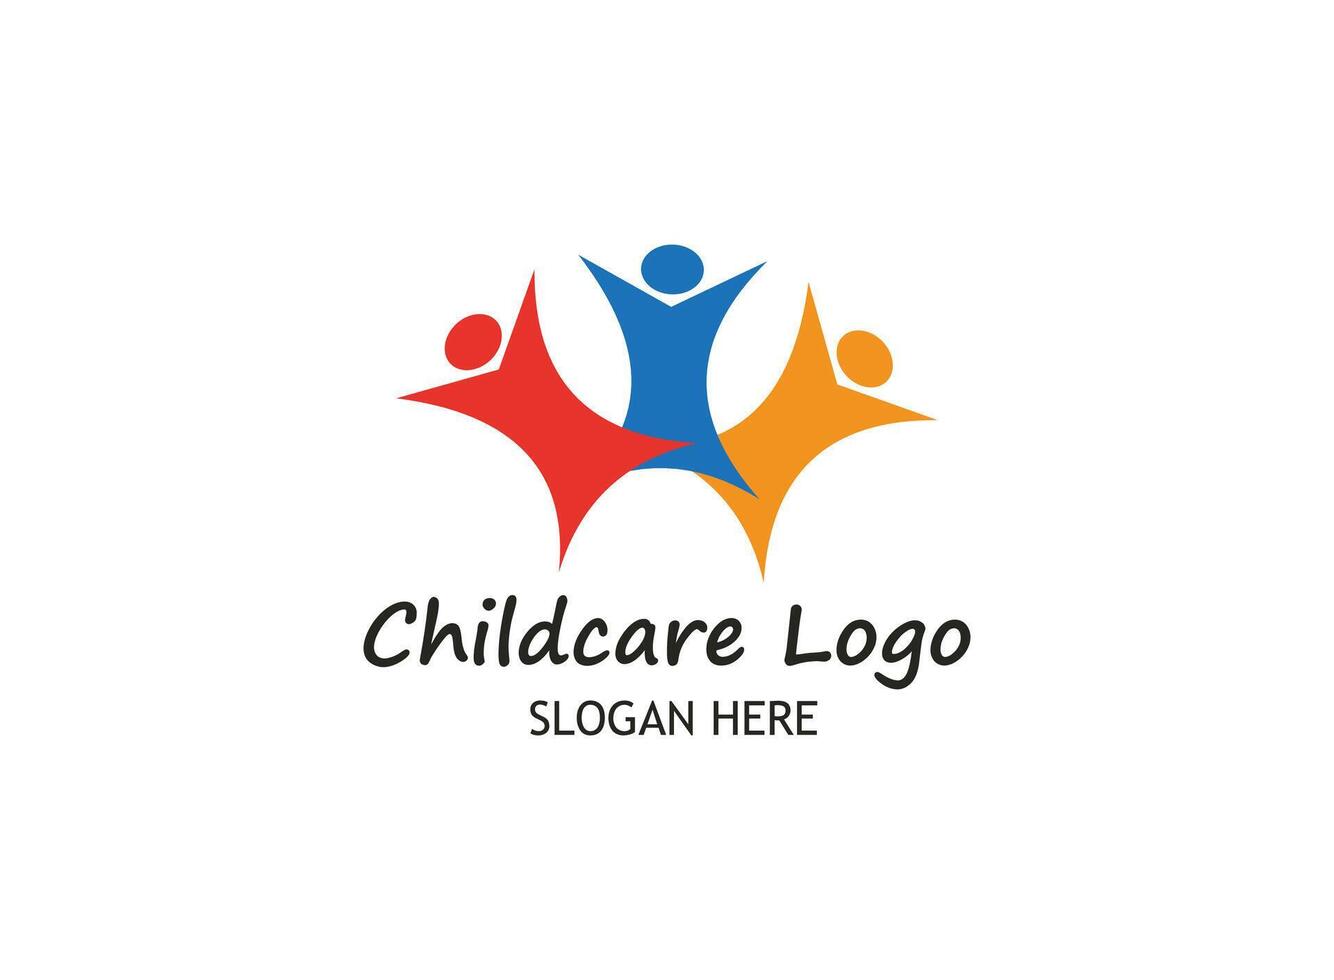 Kids care, family, charity vector logo emblem design template.